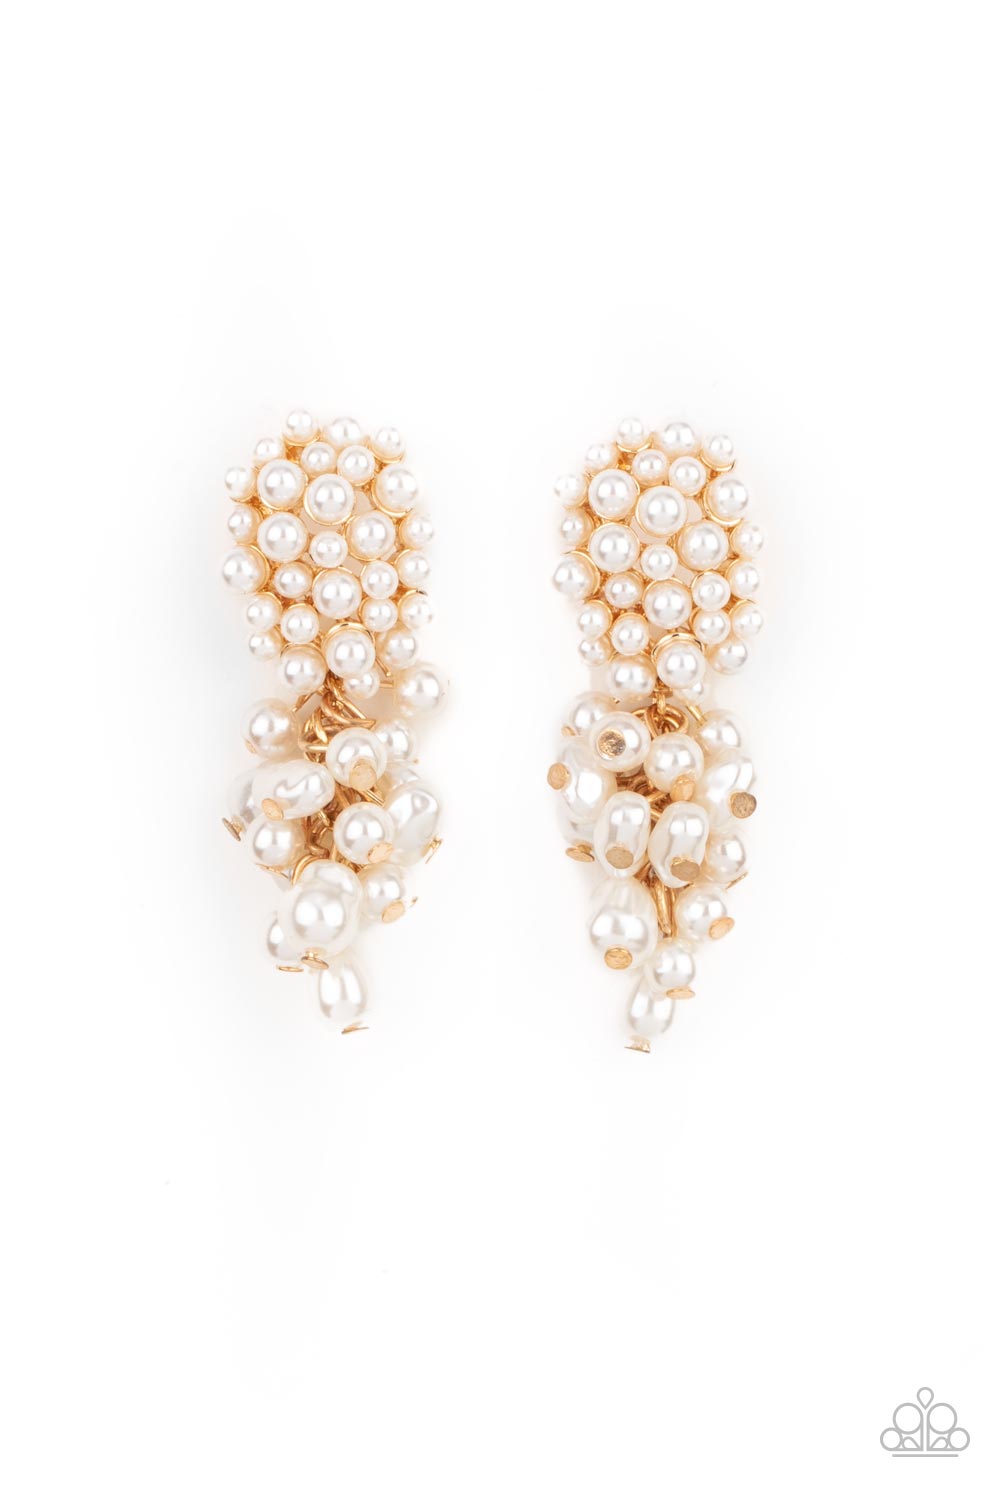 Fabulously Flattering - Gold & White Earrings - Princess Glam Shop